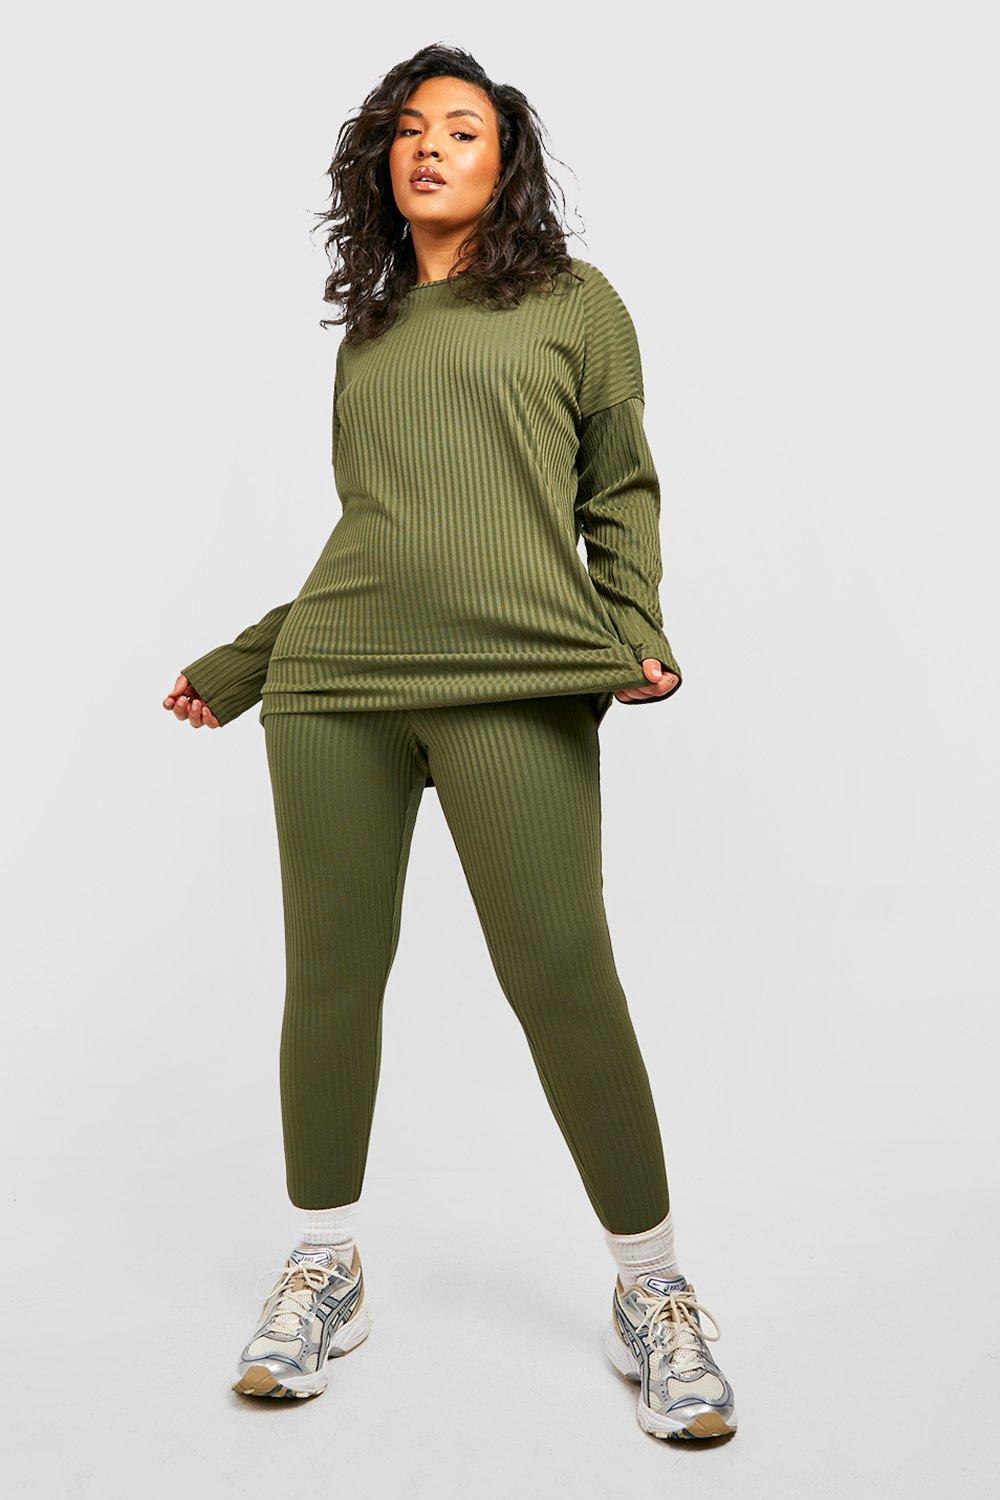 Wmstar Plus Size Two Piece Sets Women Clothing Long Top Legging